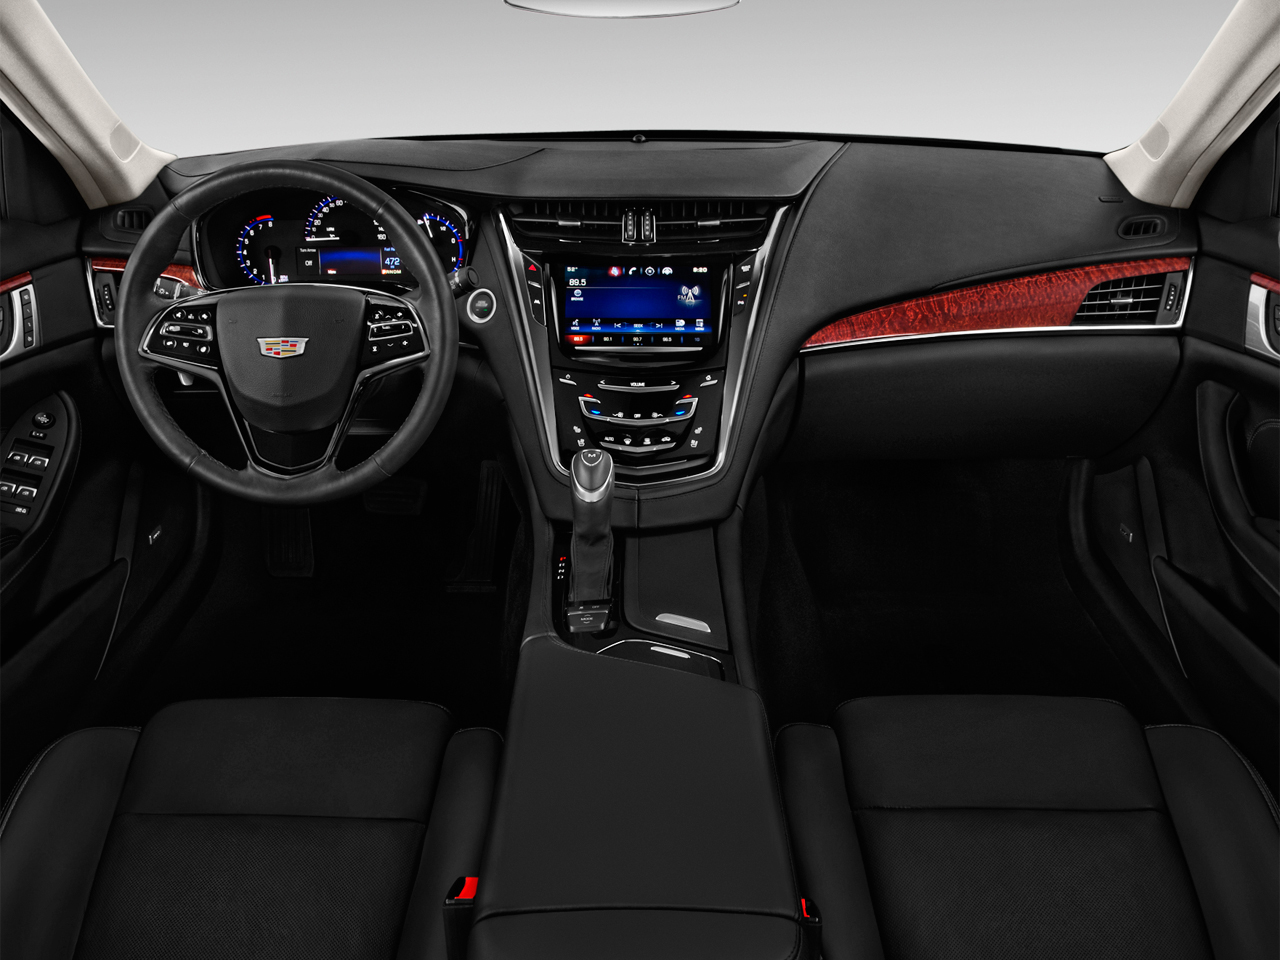 Cadillac CTS interior - Cockpit